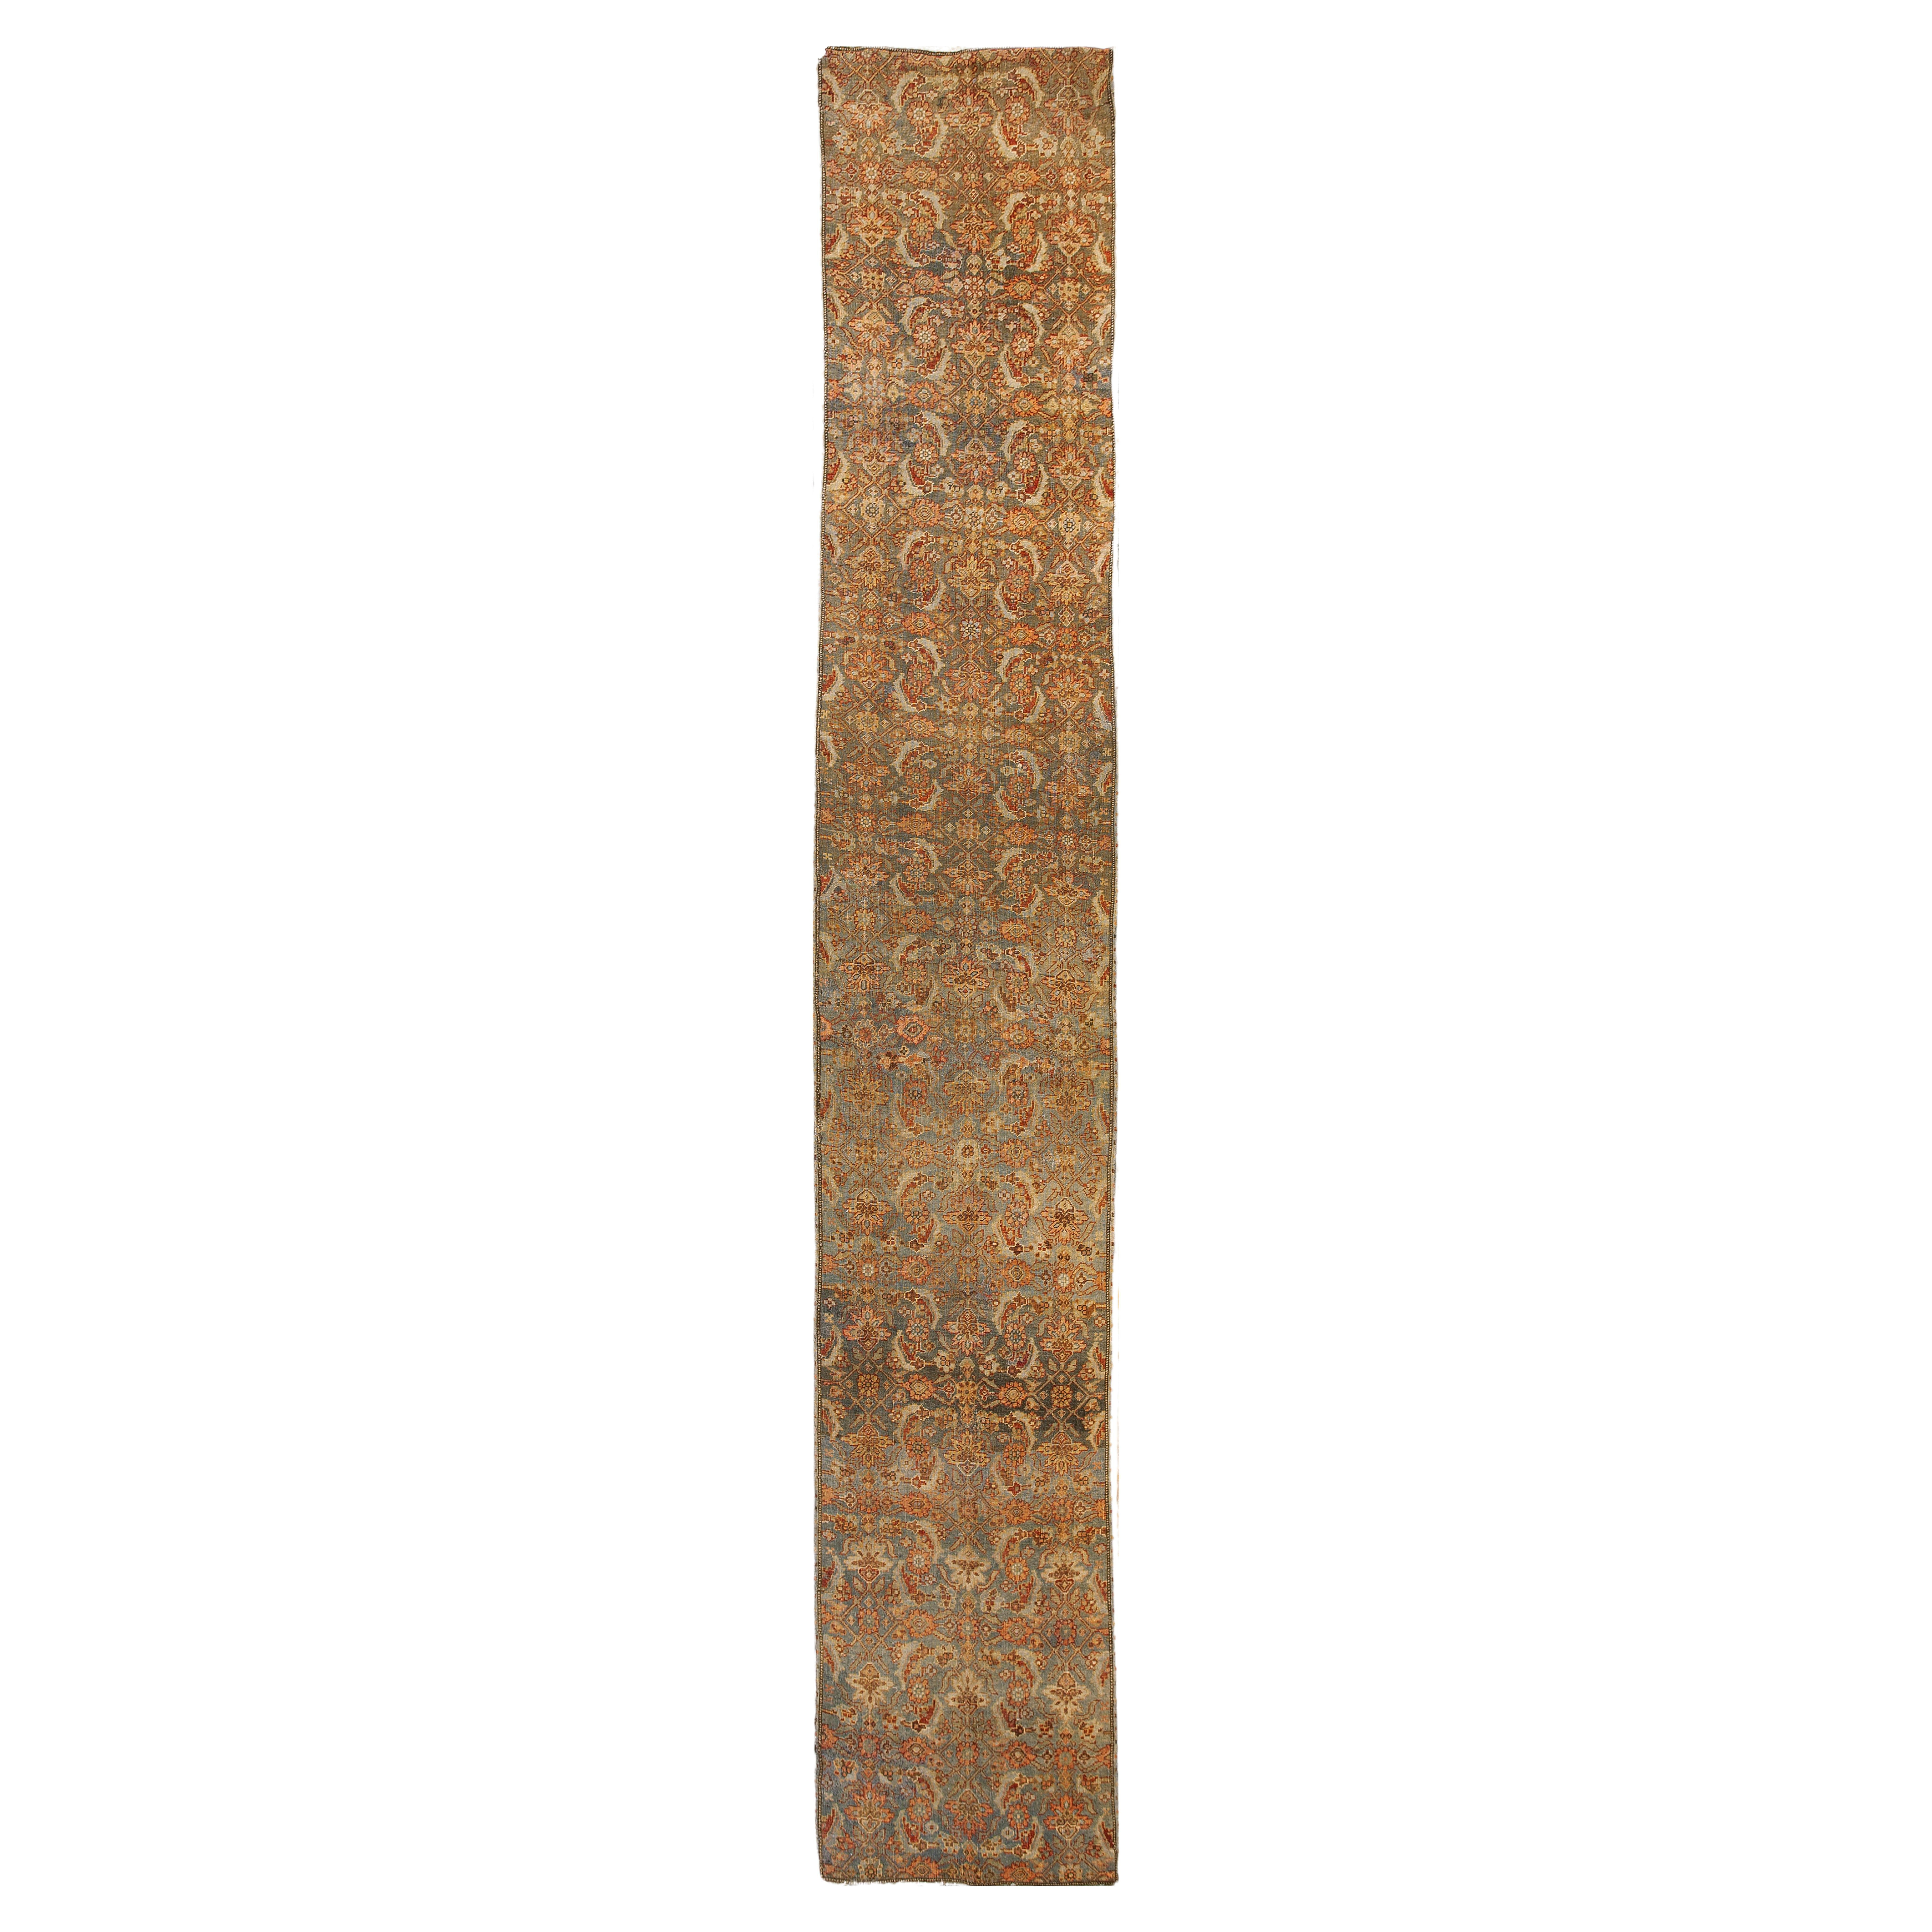 Early 20th Century W. Persian Bijar Carpet For Sale